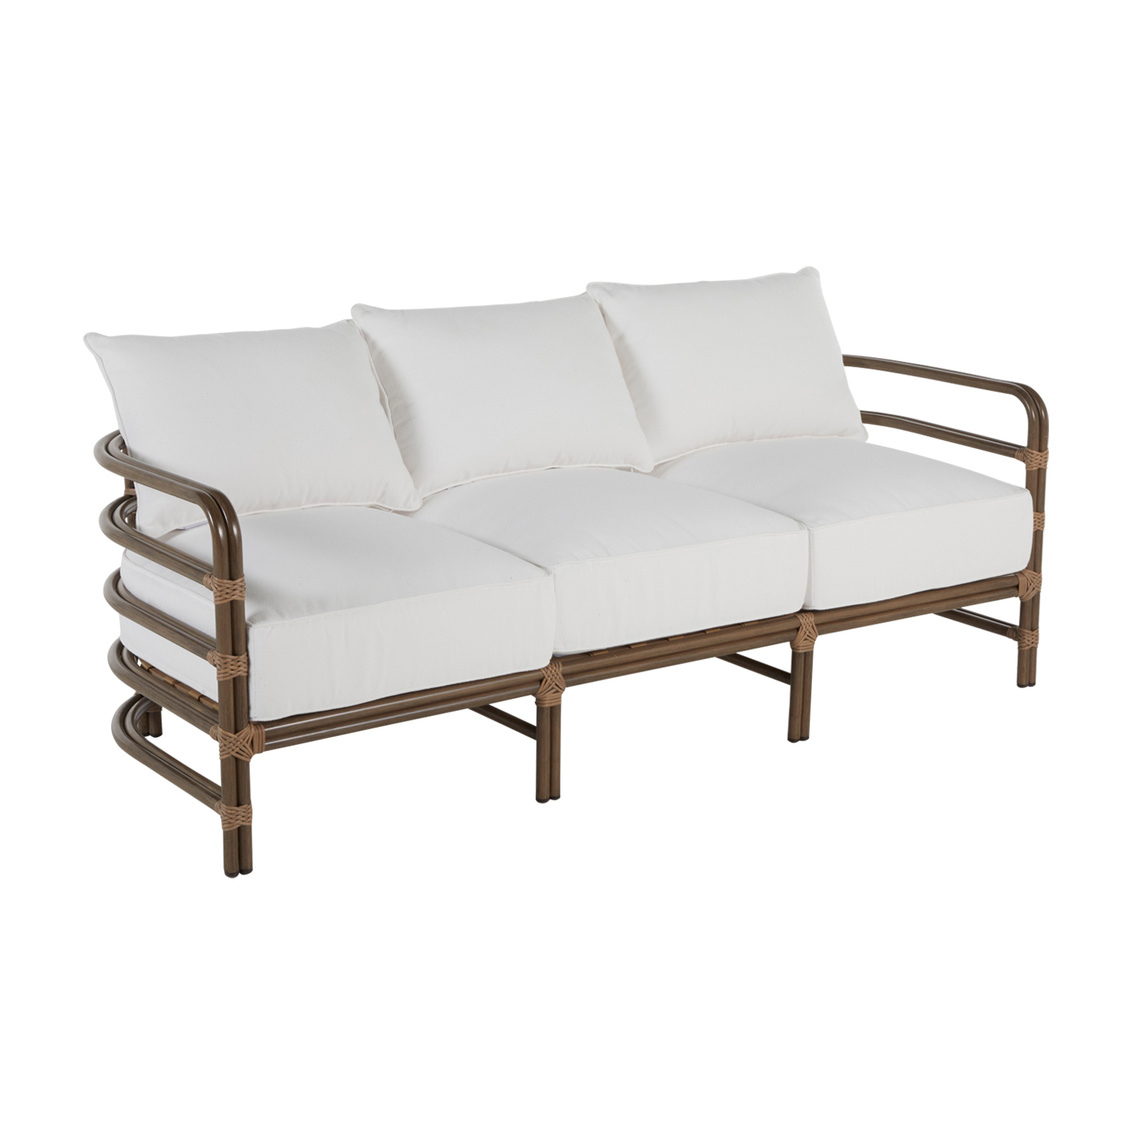 malibu sofa in burlap/oak – frame only product image